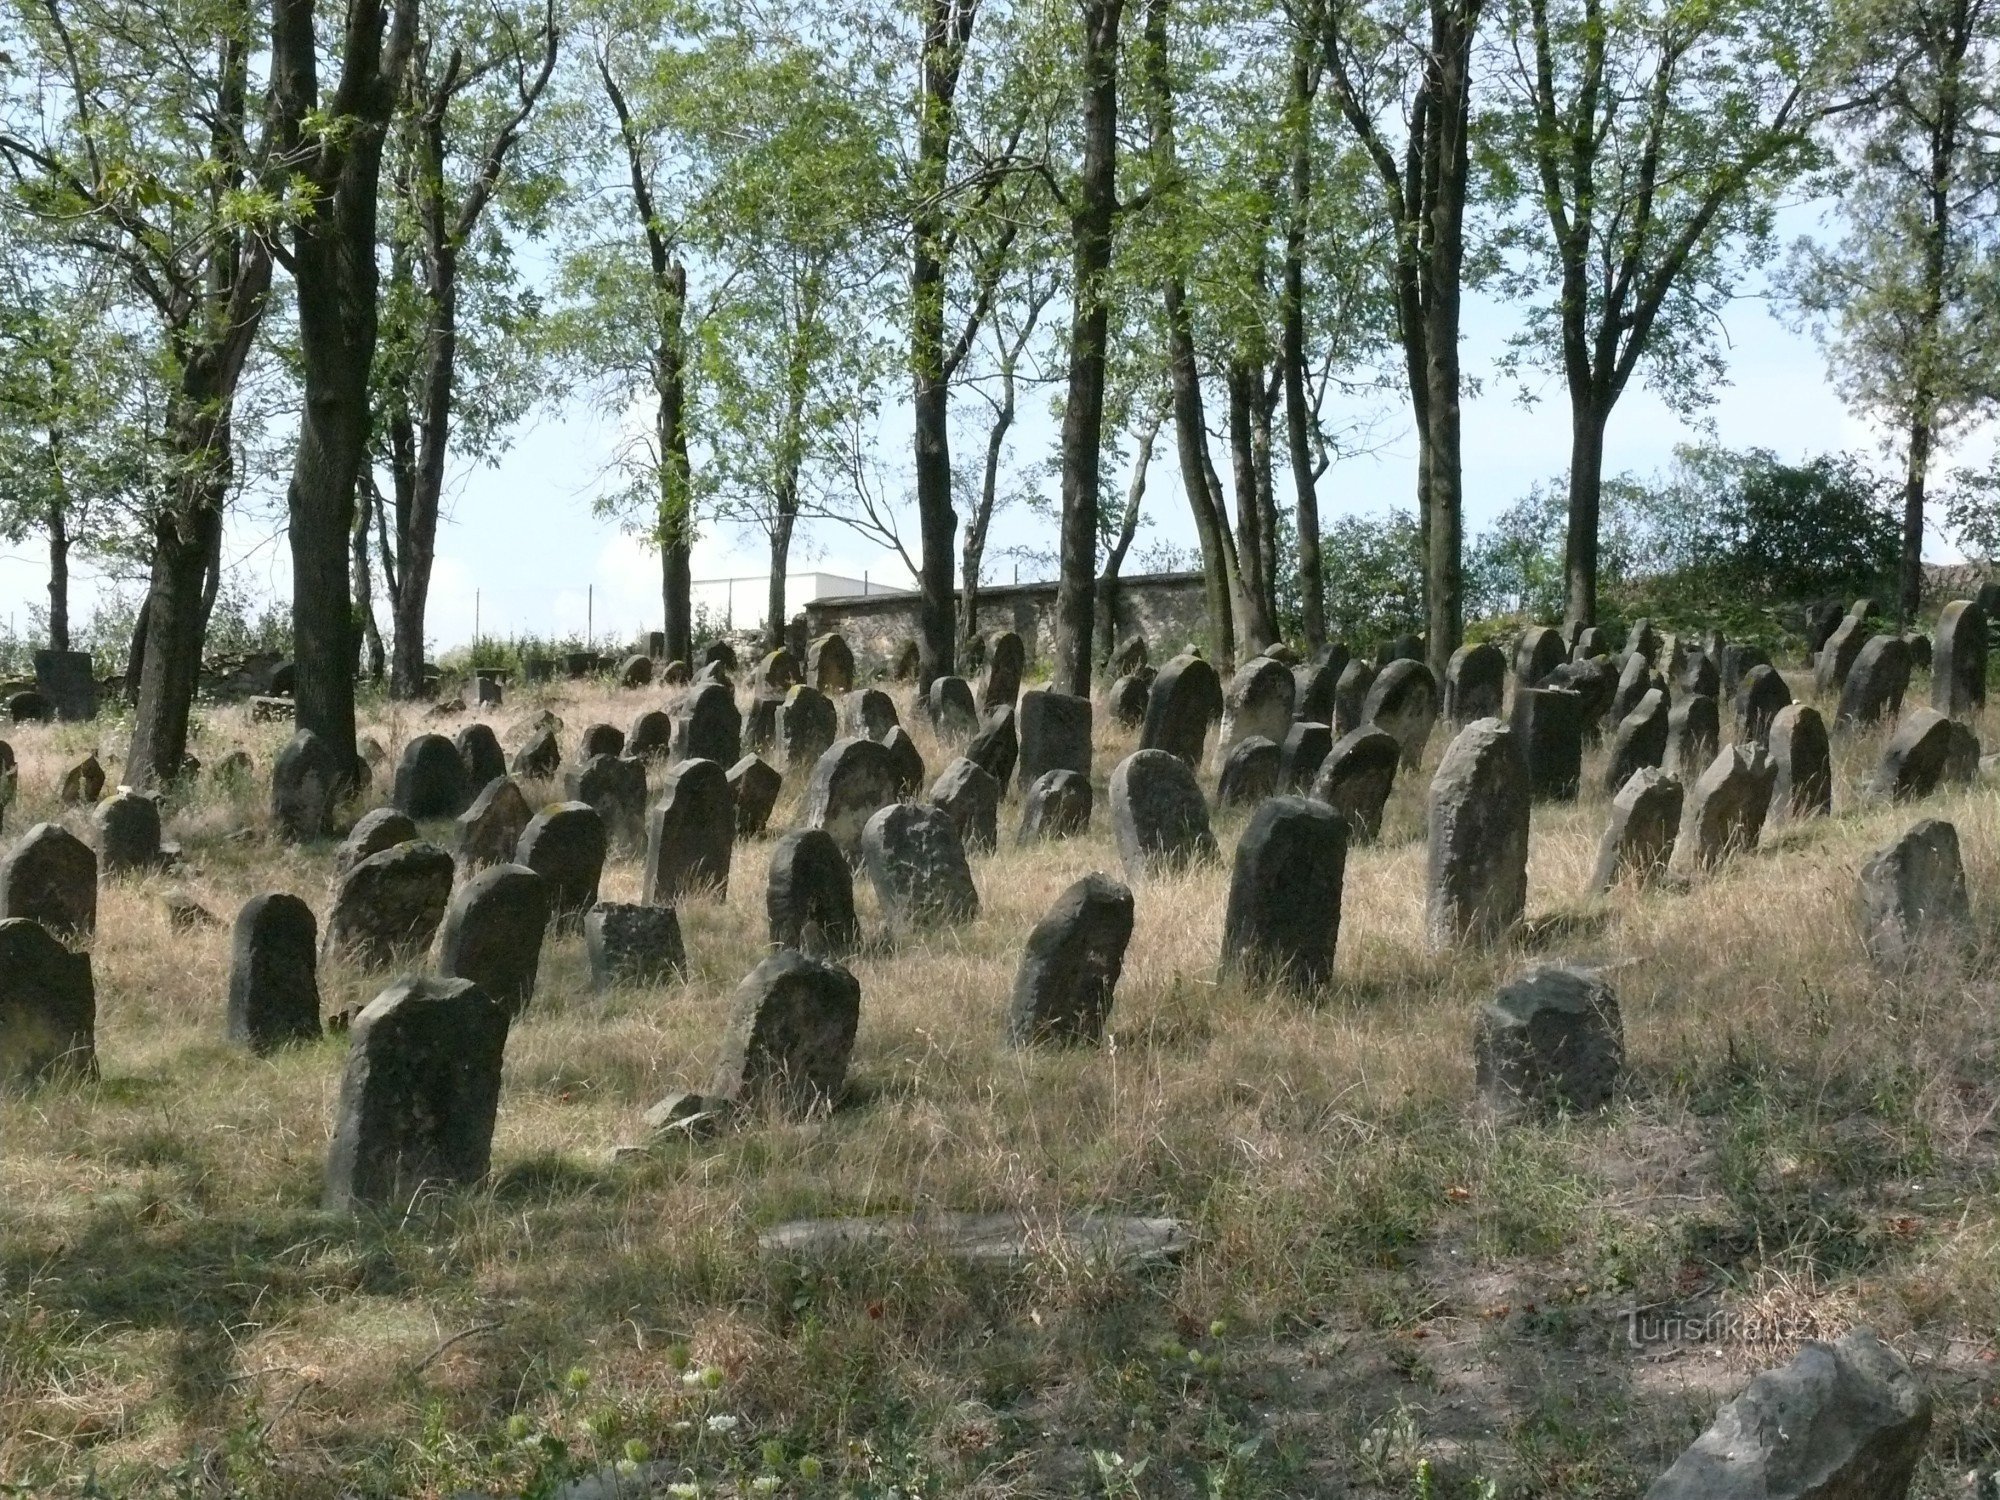 Libochovice jødiske kirkegård